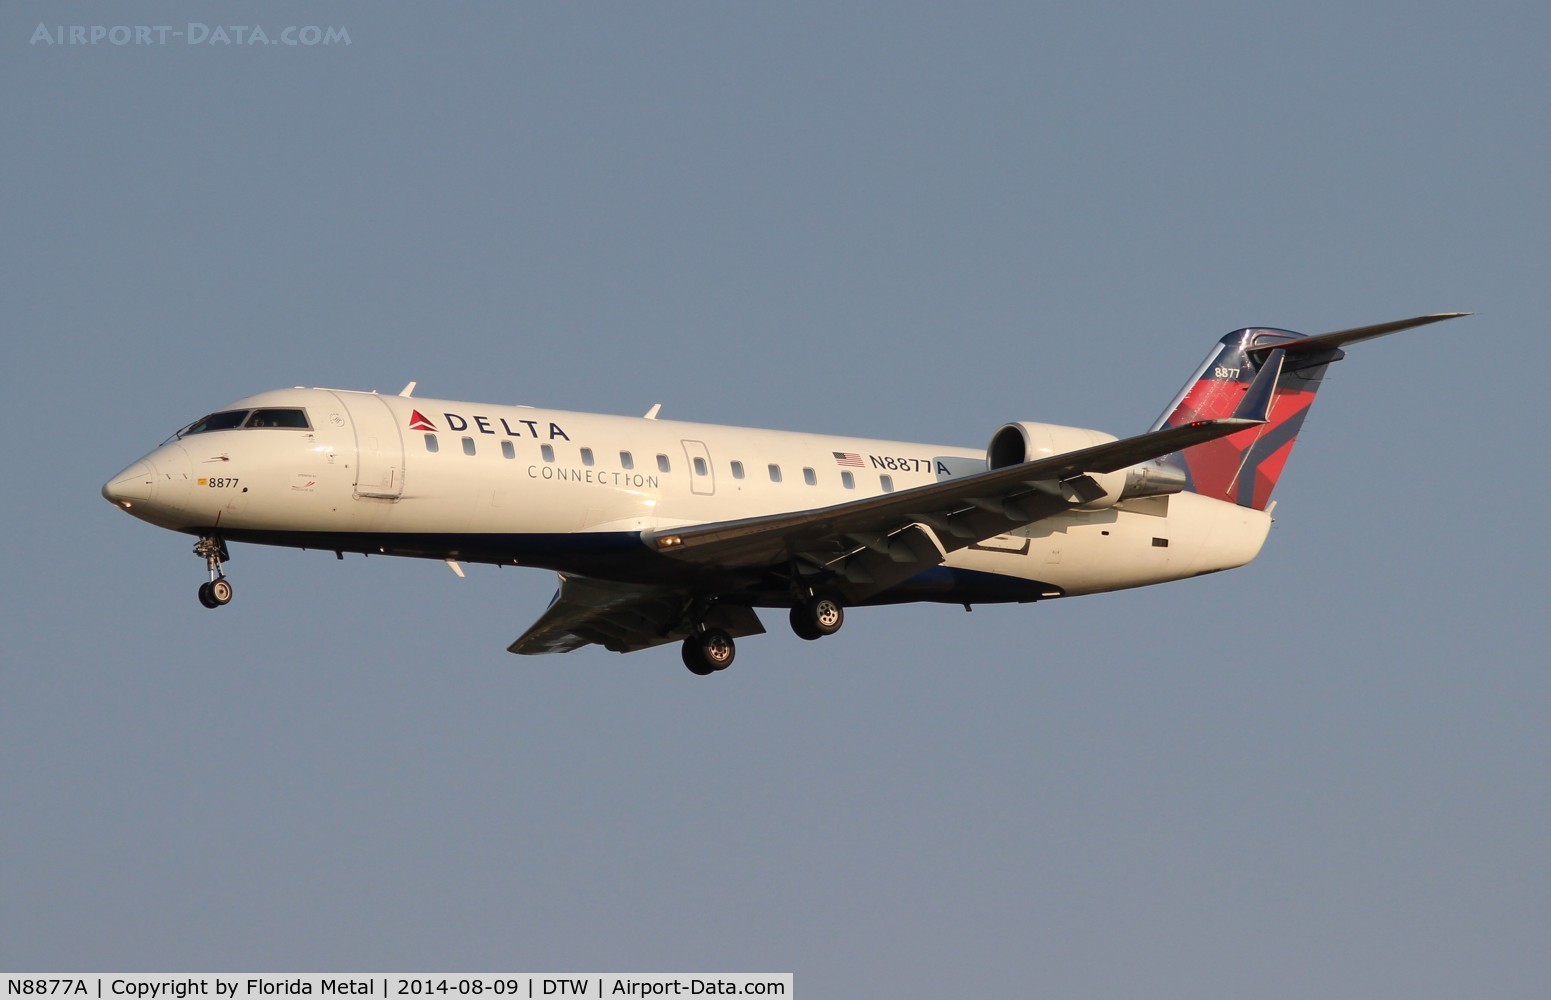 N8877A, 2003 Bombardier CRJ-440 (CL-600-2B19) C/N 7877, Delta Connection CRJ-200